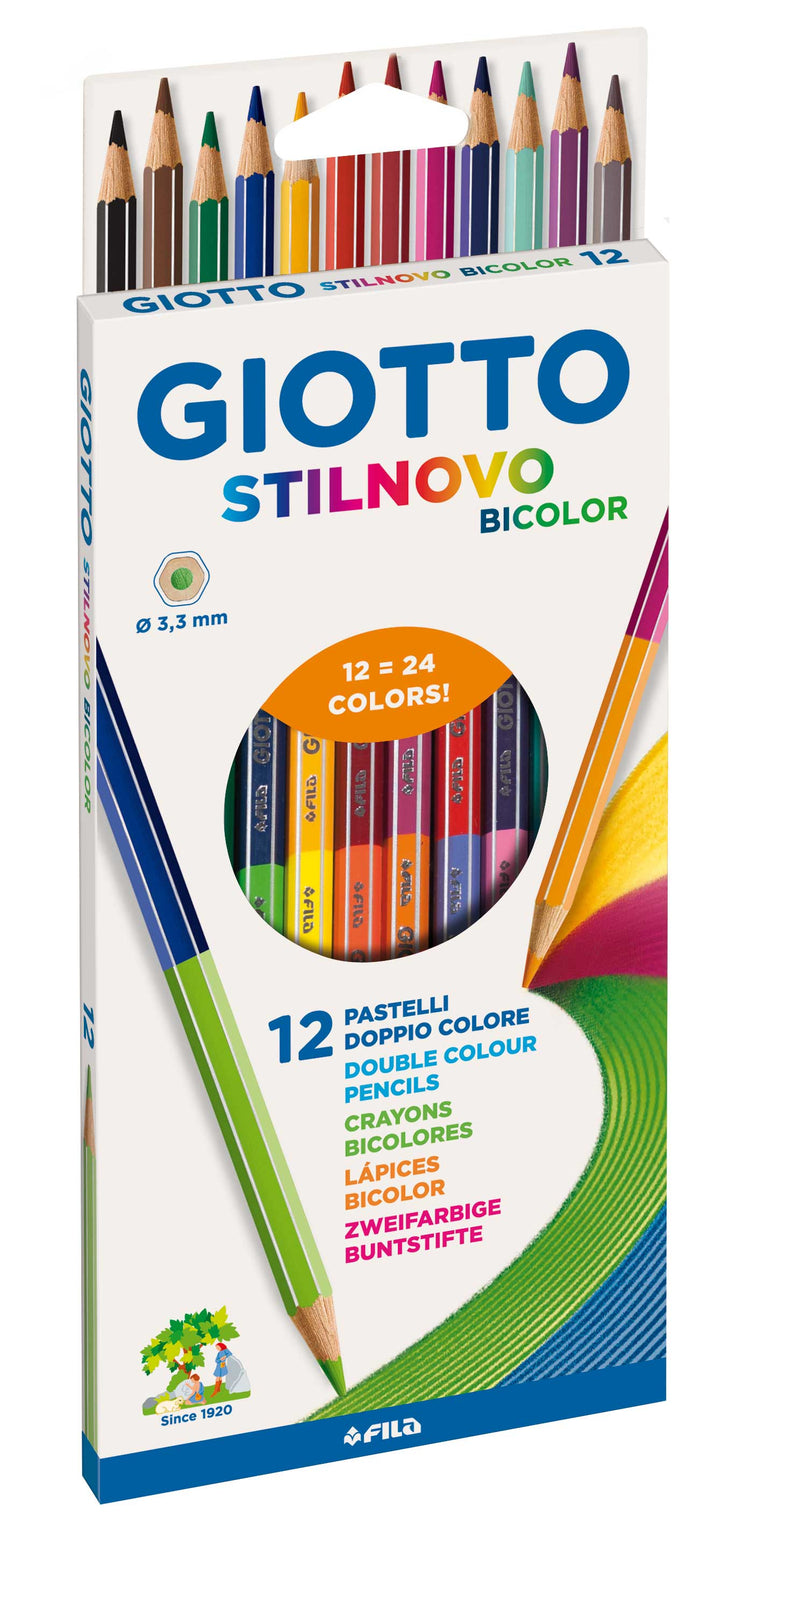 Giotto Stilnovo Bicolor Pencil 12pcs-256900